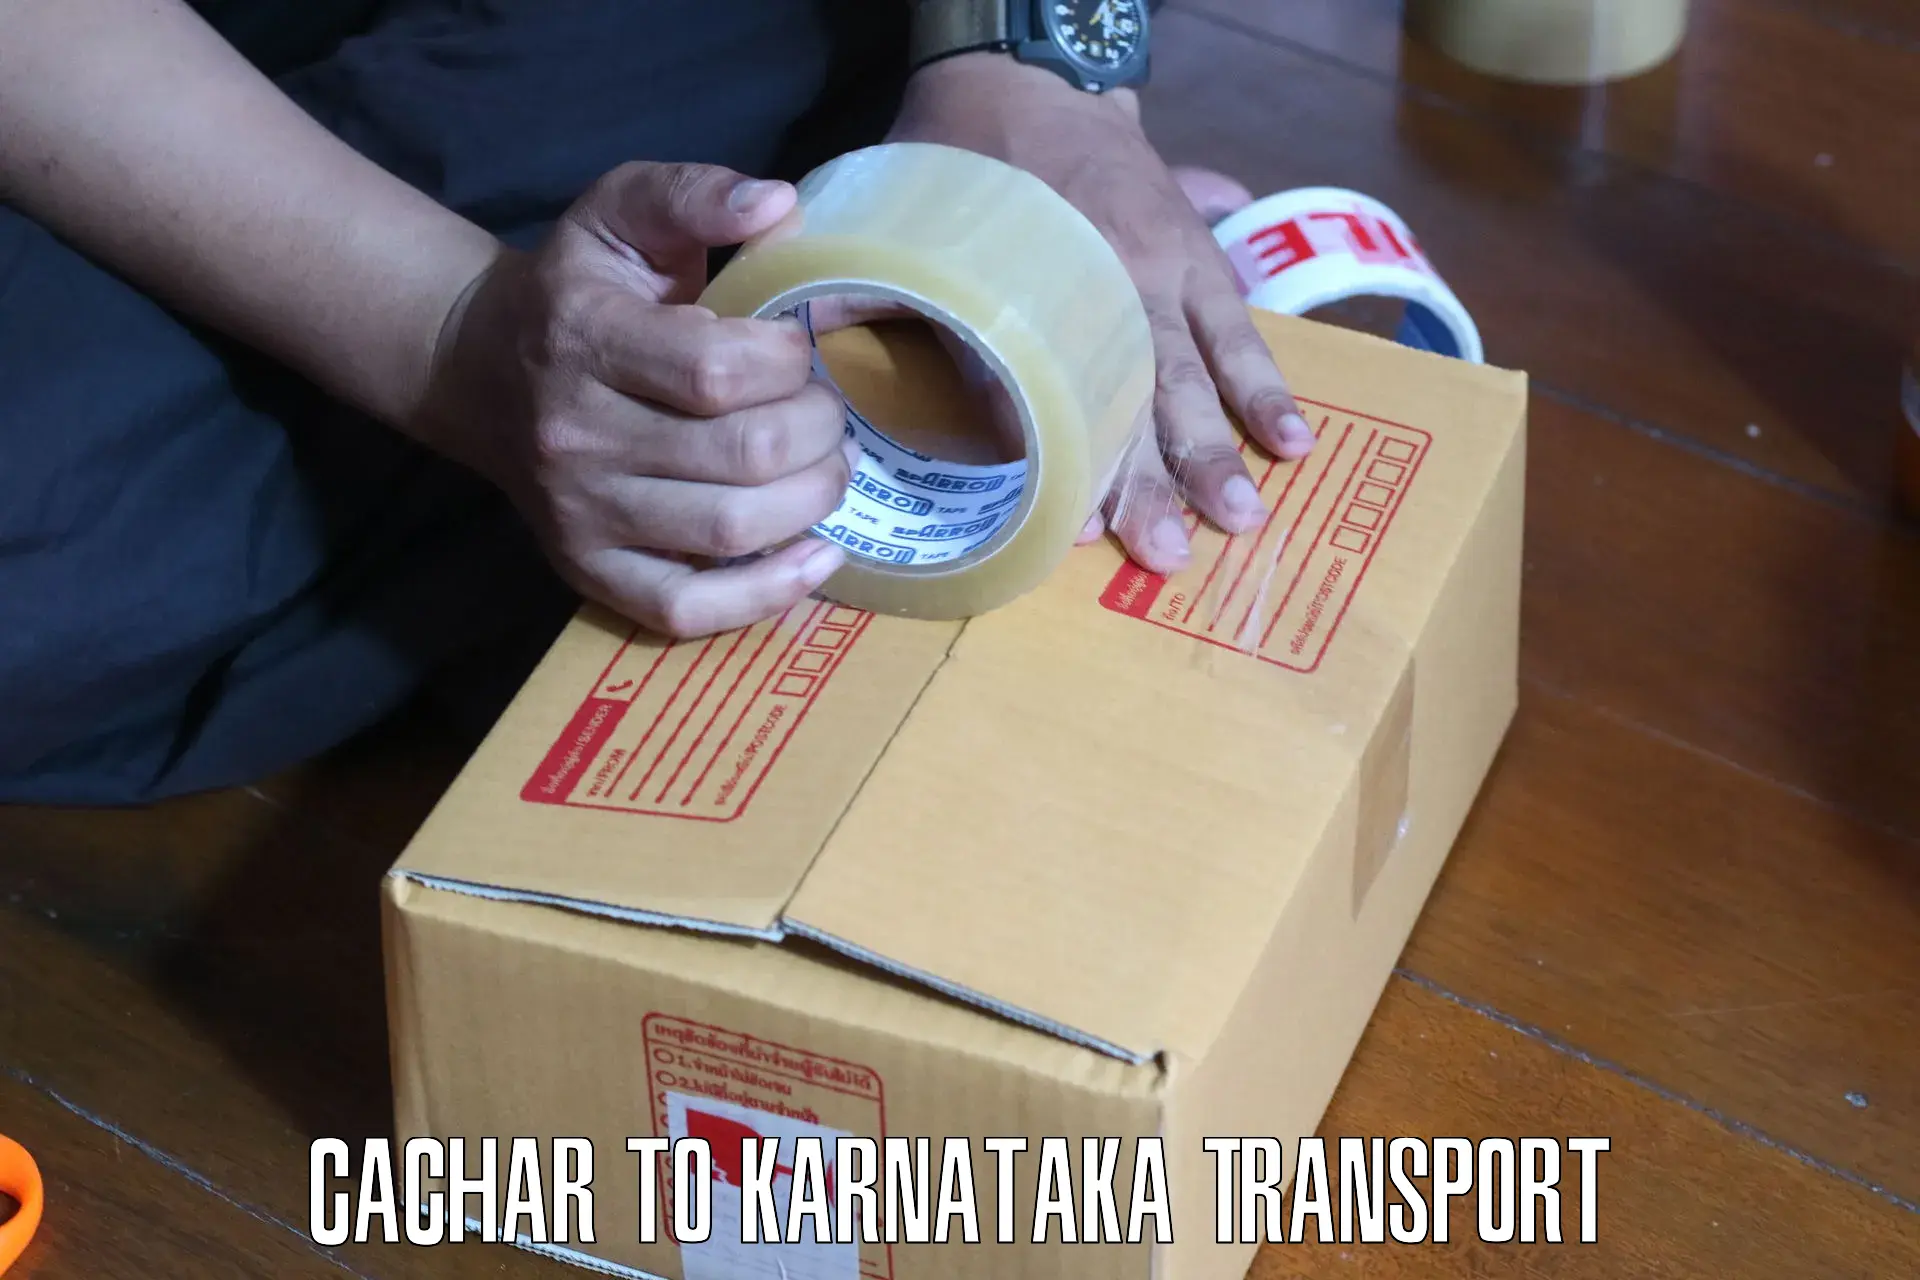 Delivery service Cachar to Dakshina Kannada